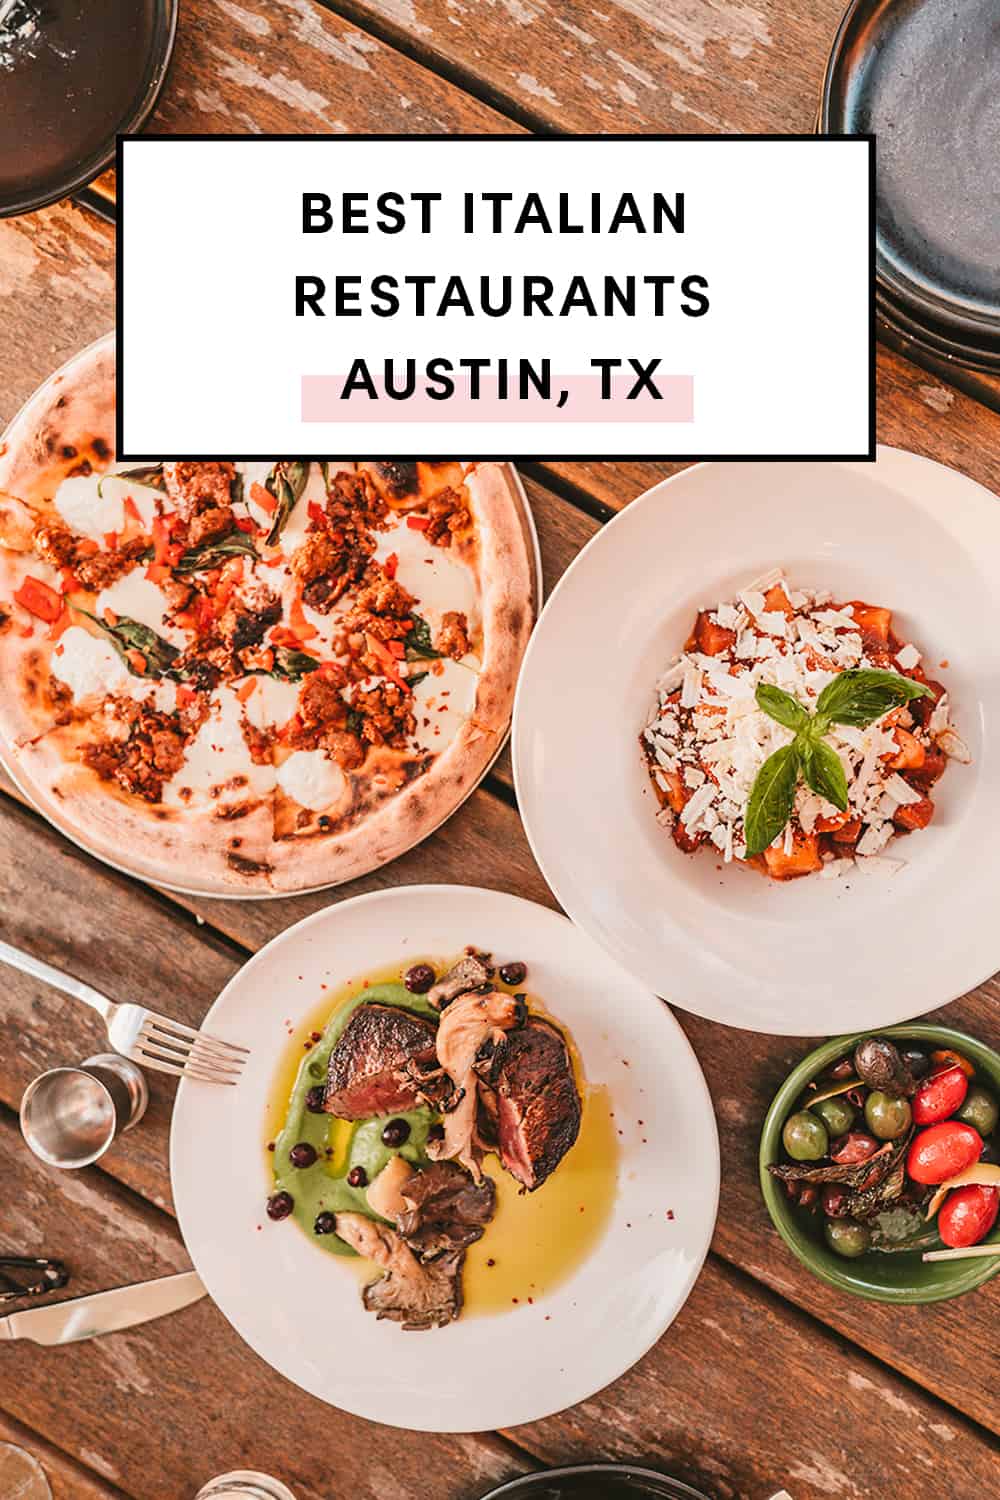 Best Italian restaurants in Austin Texas